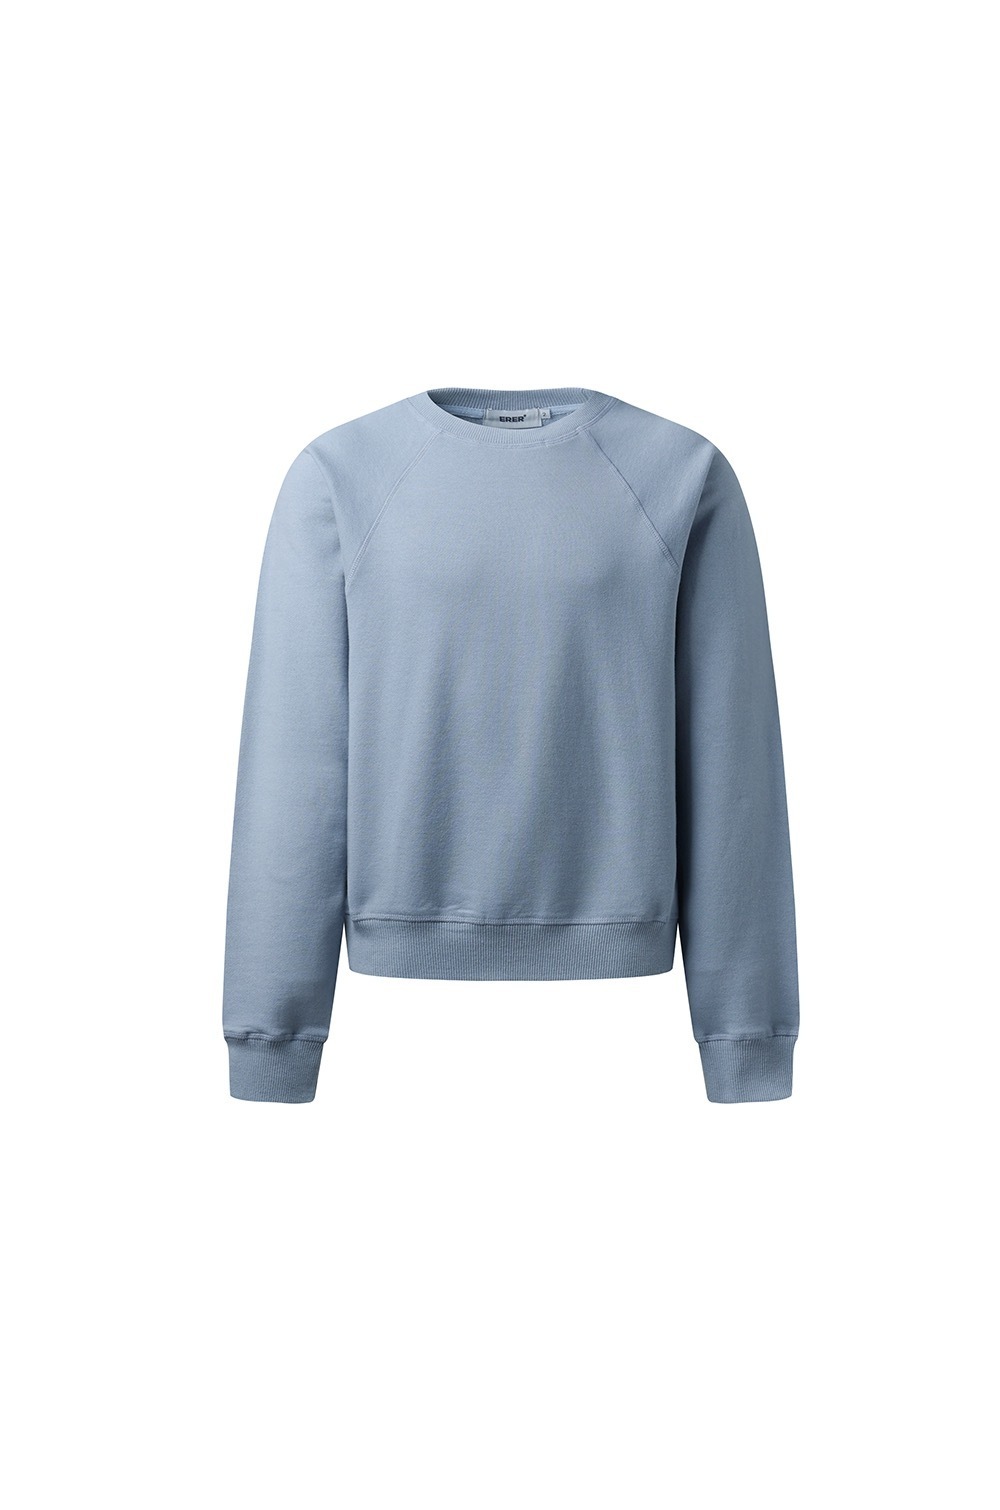 [UN] Basic sweatshirt - Sky Blue